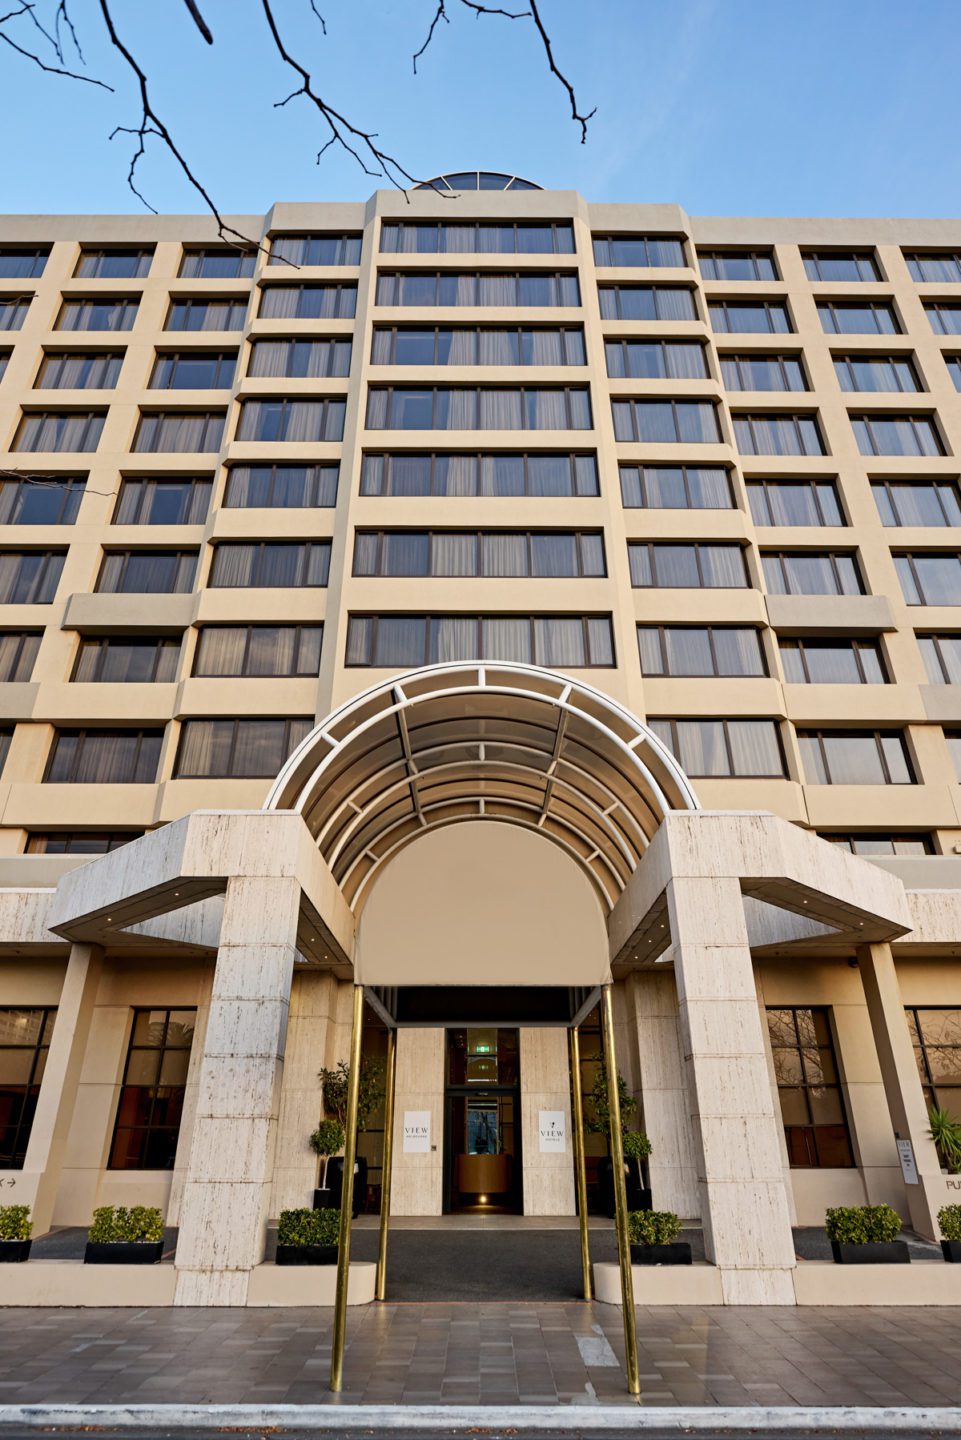 Melbourne hotel building